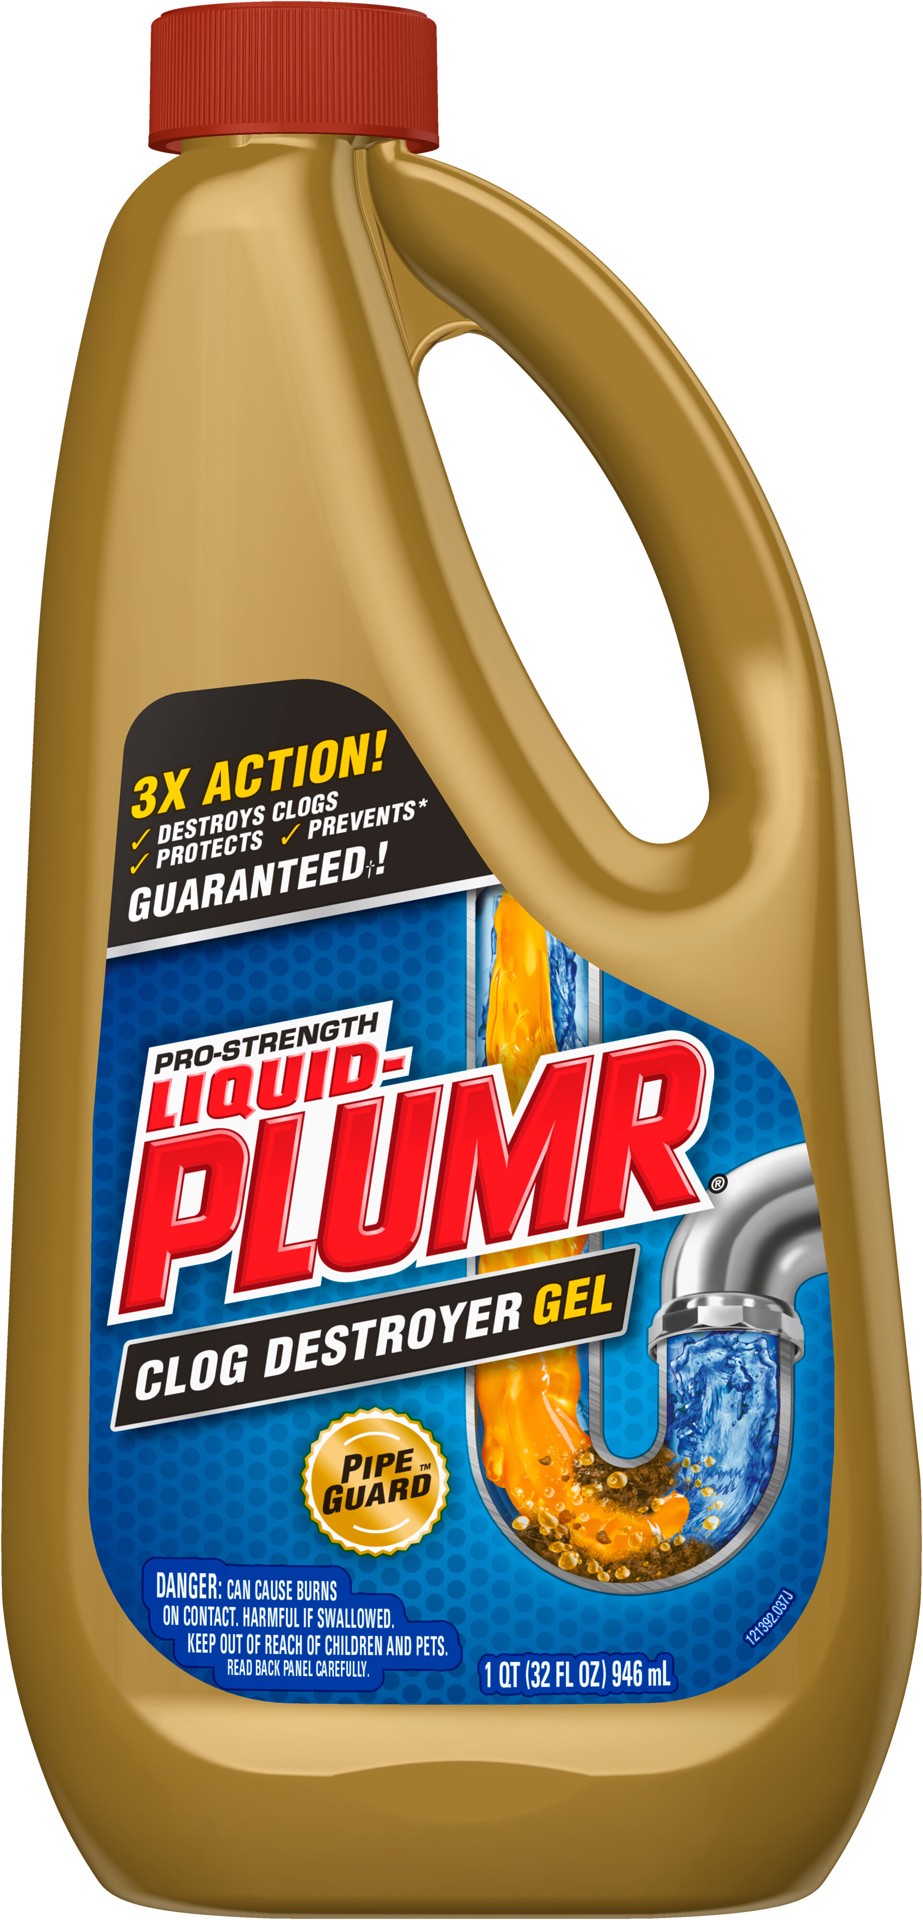 slide 1 of 2, Liquid-Plumr Pro-Strength Clog Destroyer Gel with PipeGuard Liquid Drain Cleaner, 1 qt